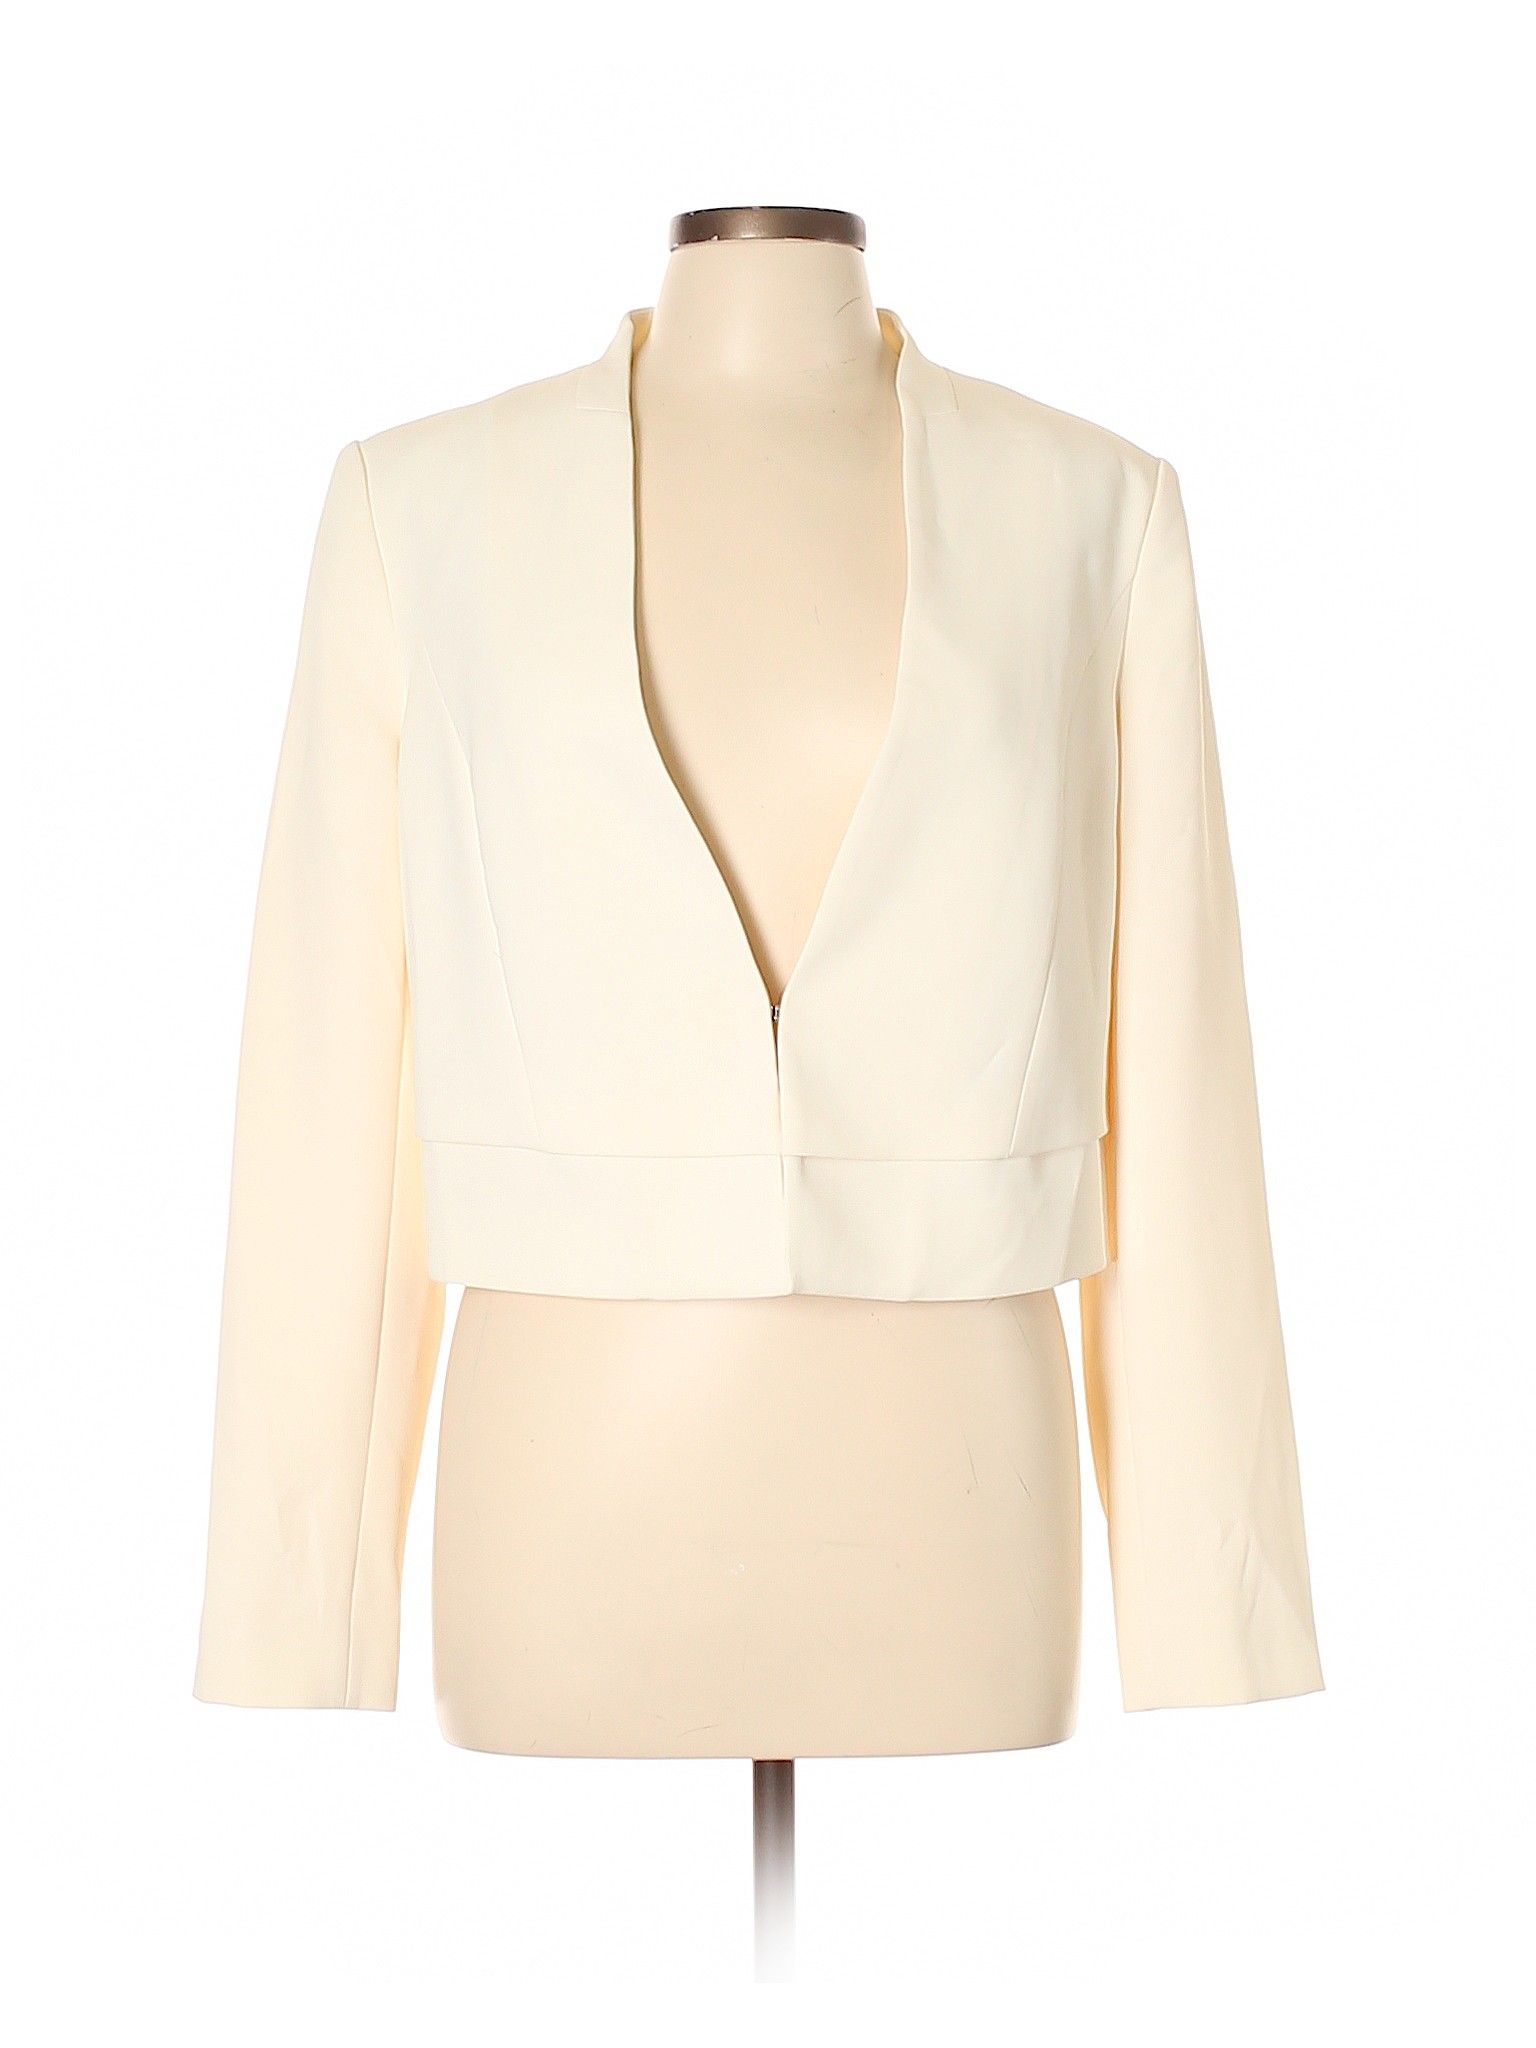 White House Black Market Blazer Size 12: Ivory Women's Jackets & Outerwear - 44684815 | thredUP